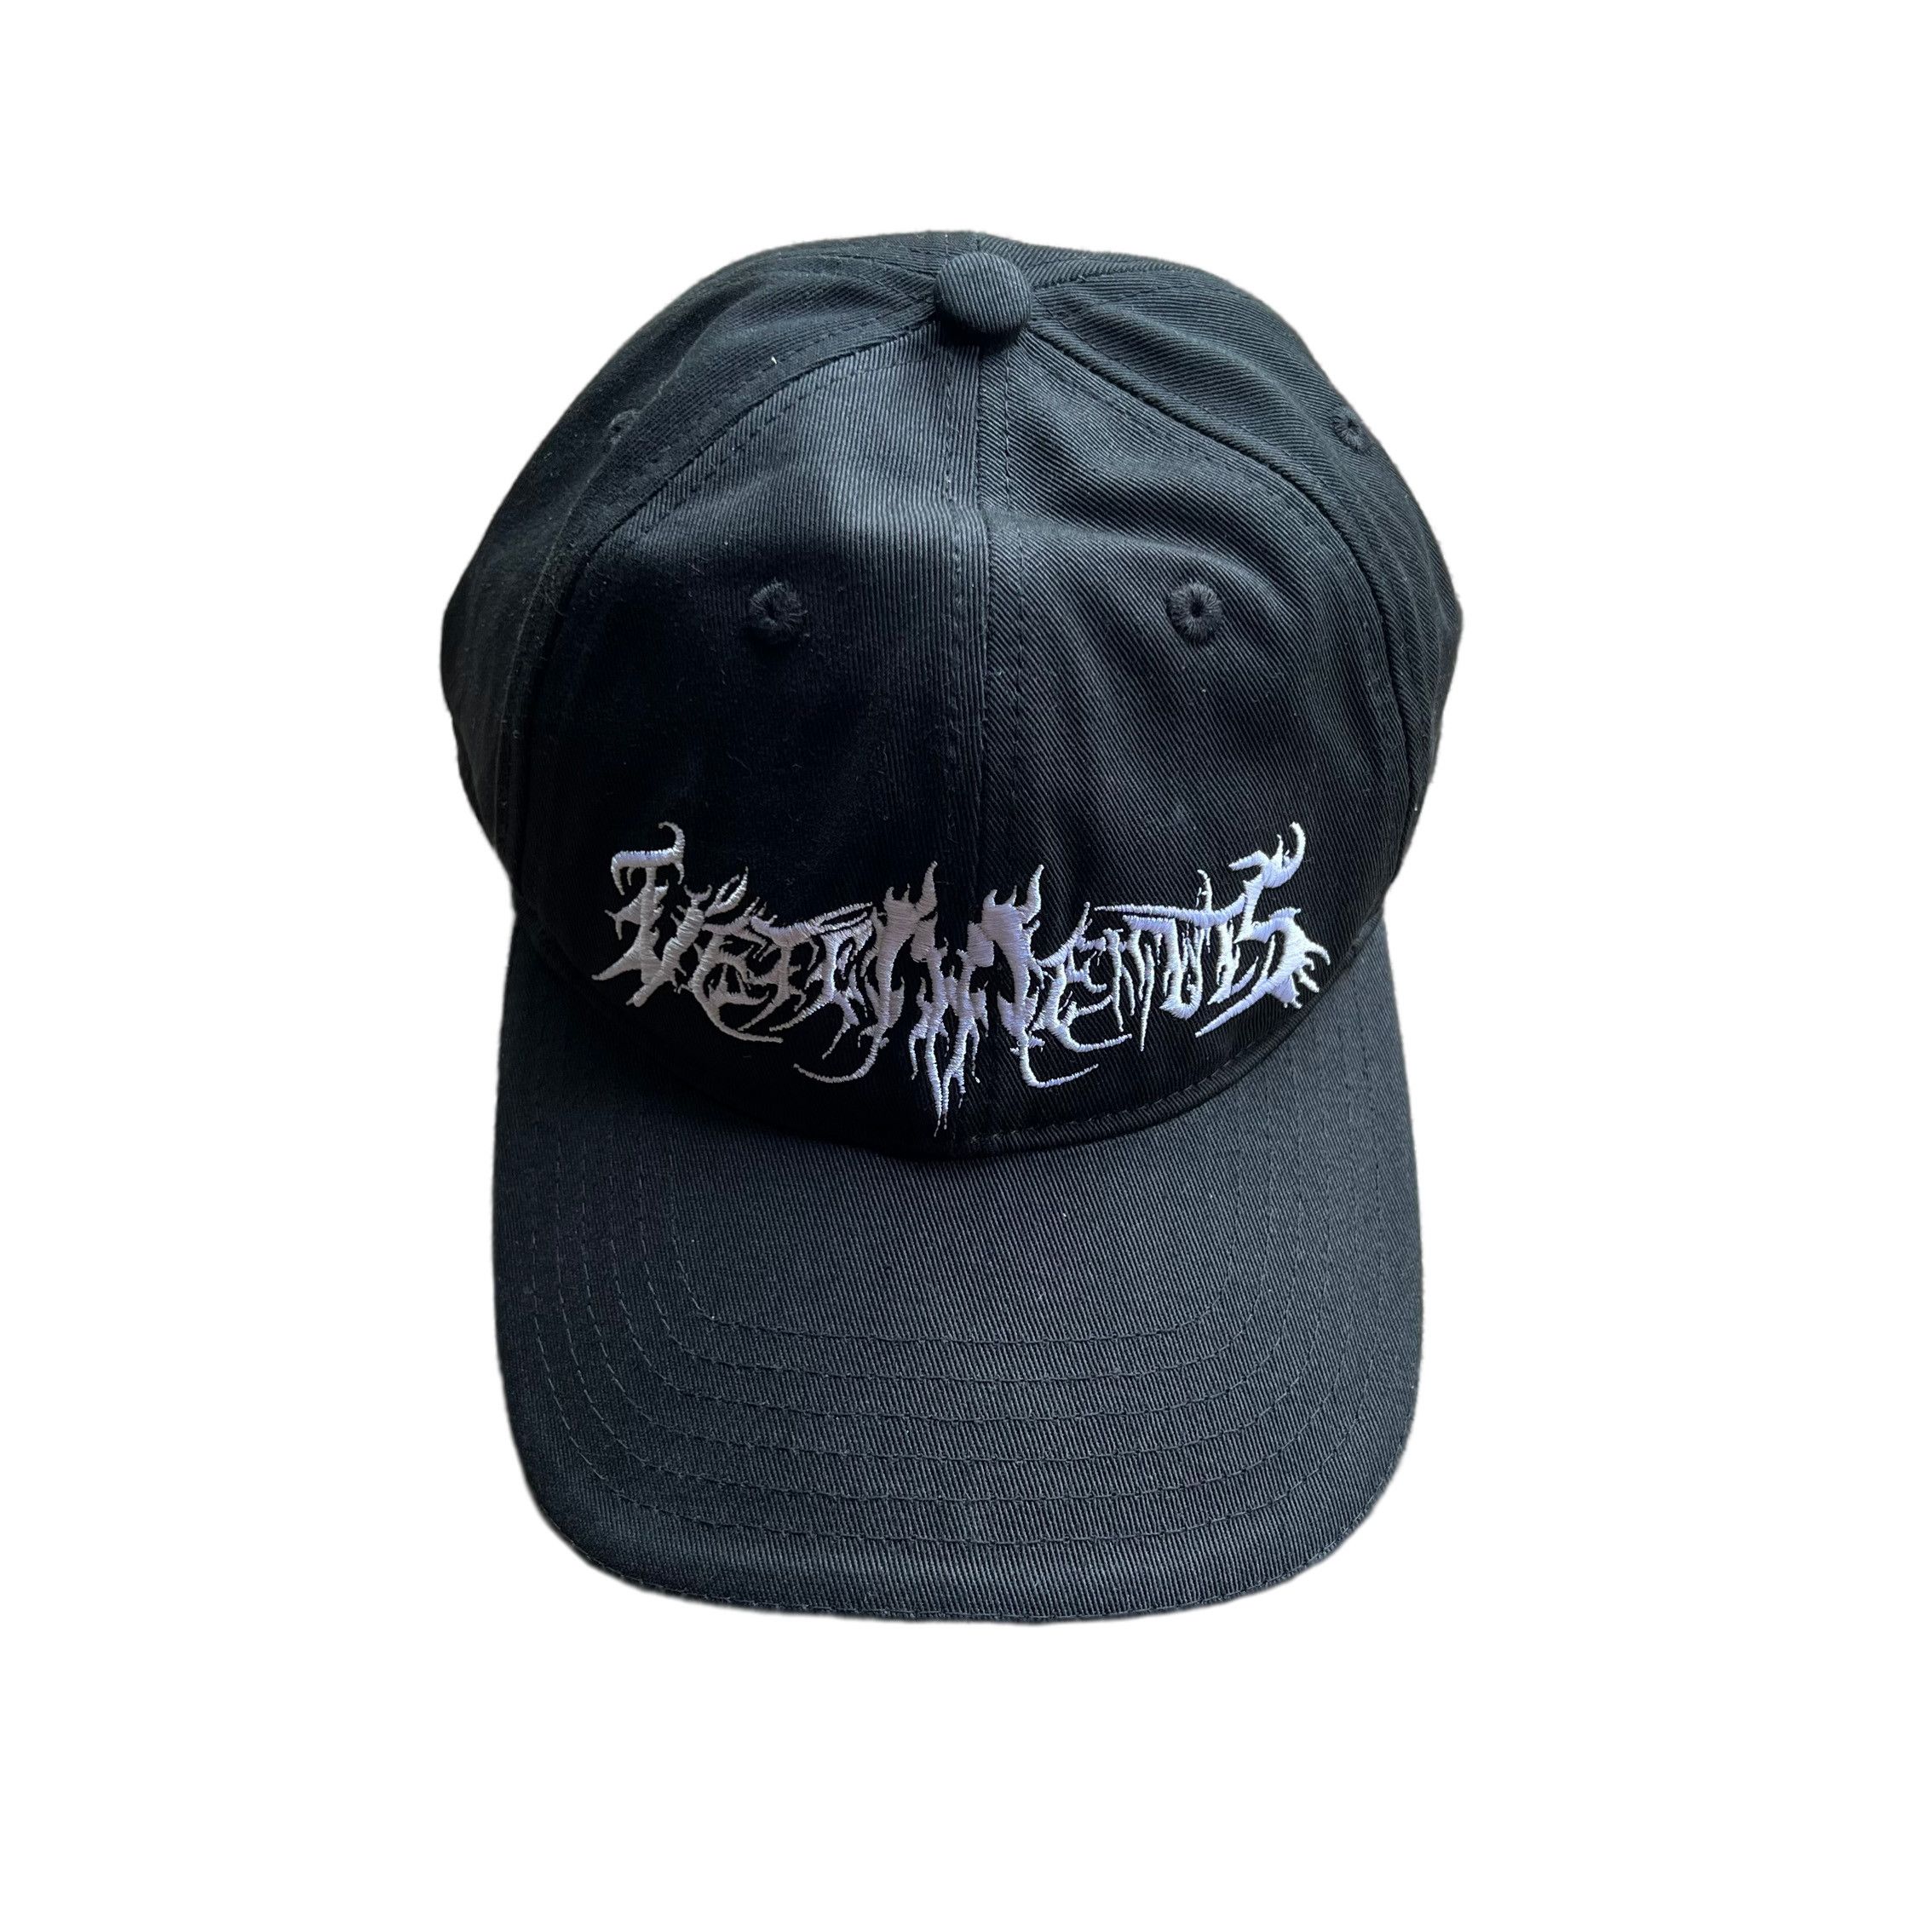 Vetements Vetements Goth cap Metal logo | Grailed